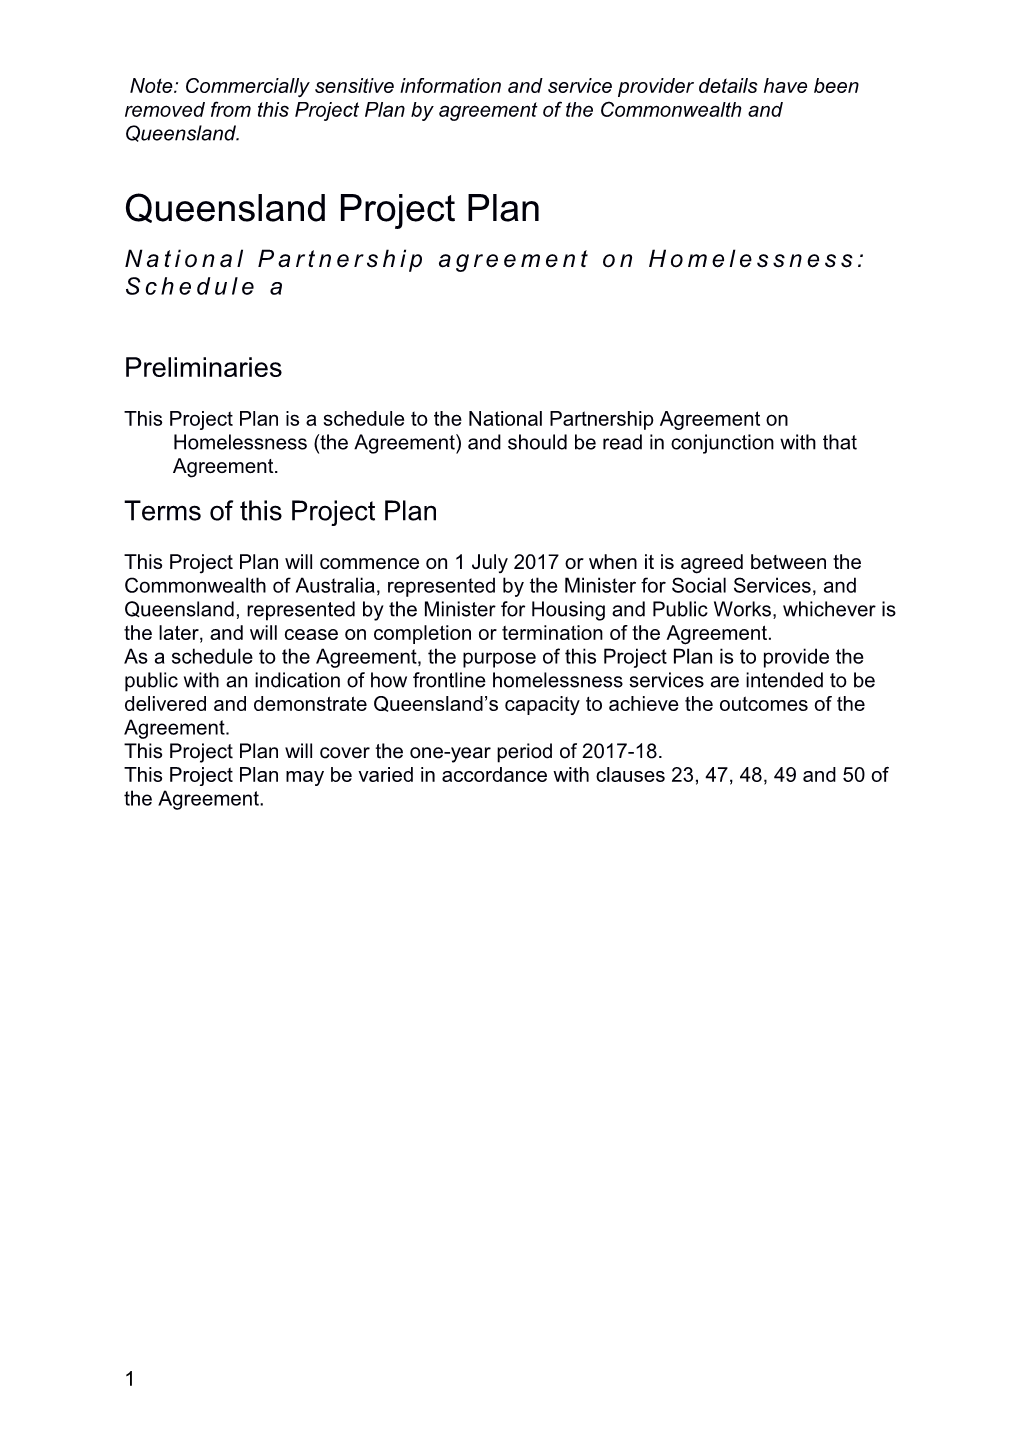 National Partnership Agreement on Homelessness - 2015-17